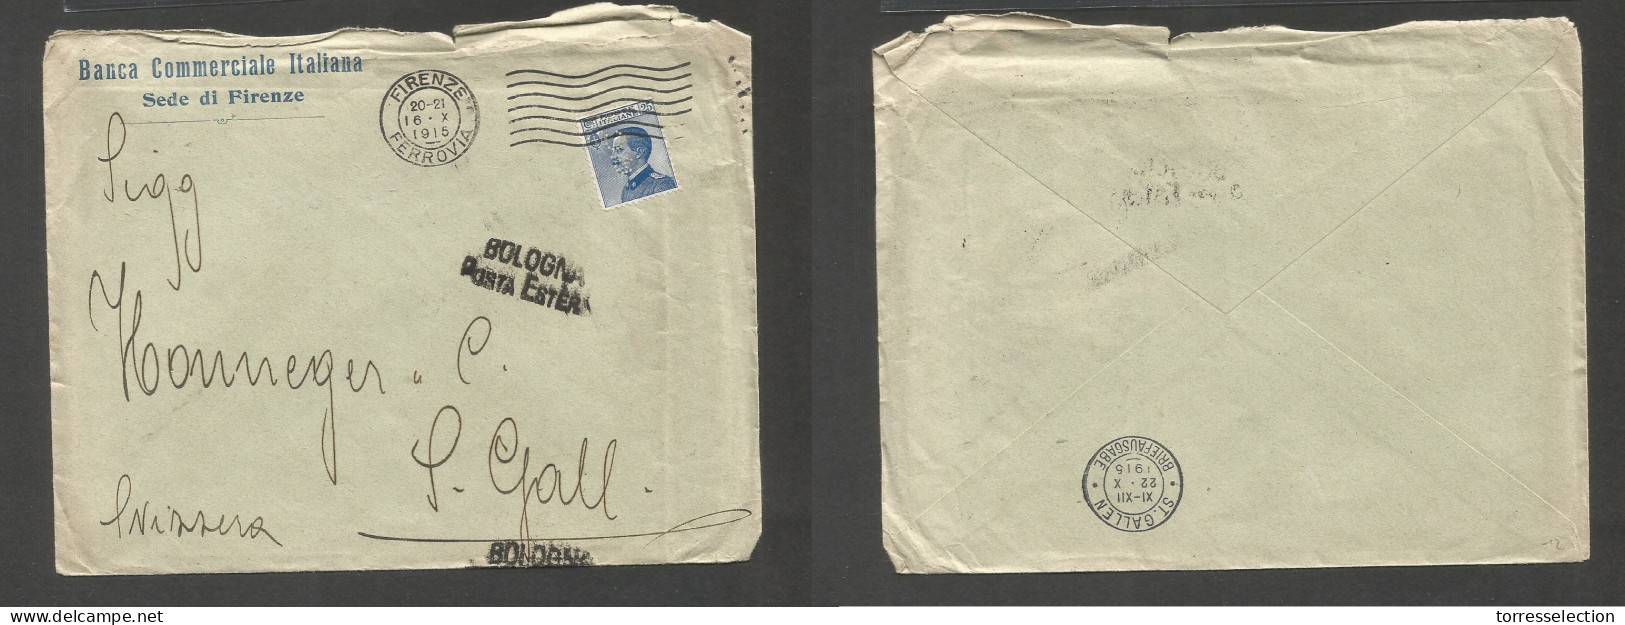 Italy - XX. 1915 (16 Oct) Perfin. BCI. Firenze - Switzerland, St. Gallen (22 Oct) Single Fkd Envelope. SALE. - Unclassified